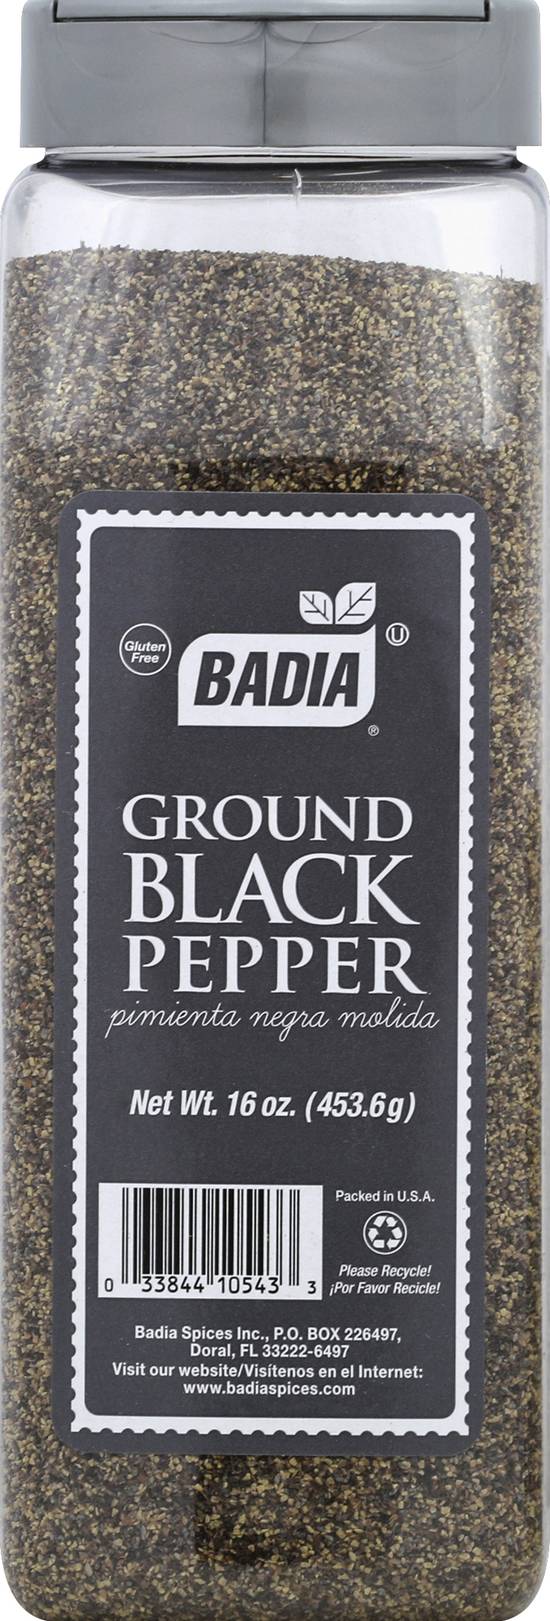 Badia Pimienta Negra Molida Ground Black Pepper